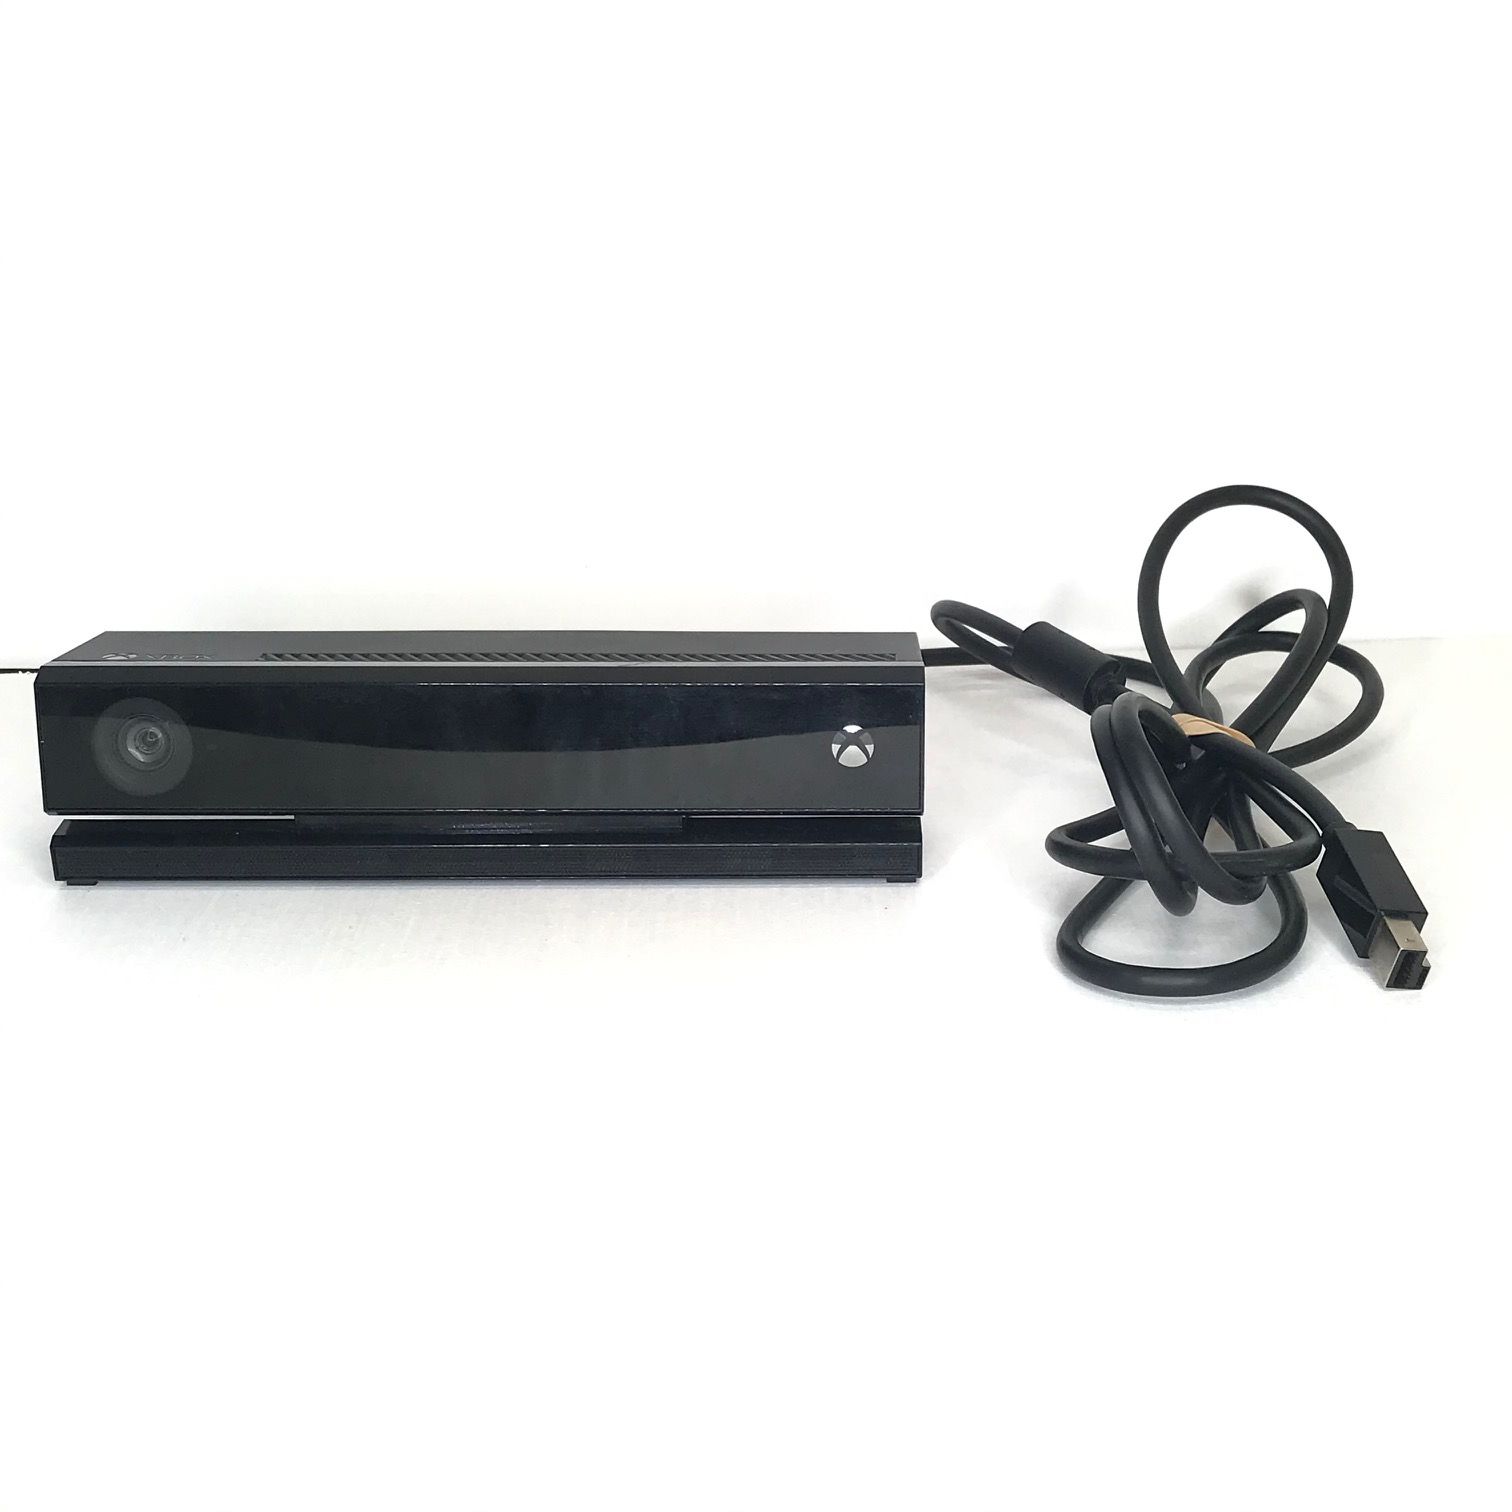 Microsoft Kinect Sensor Xbox One